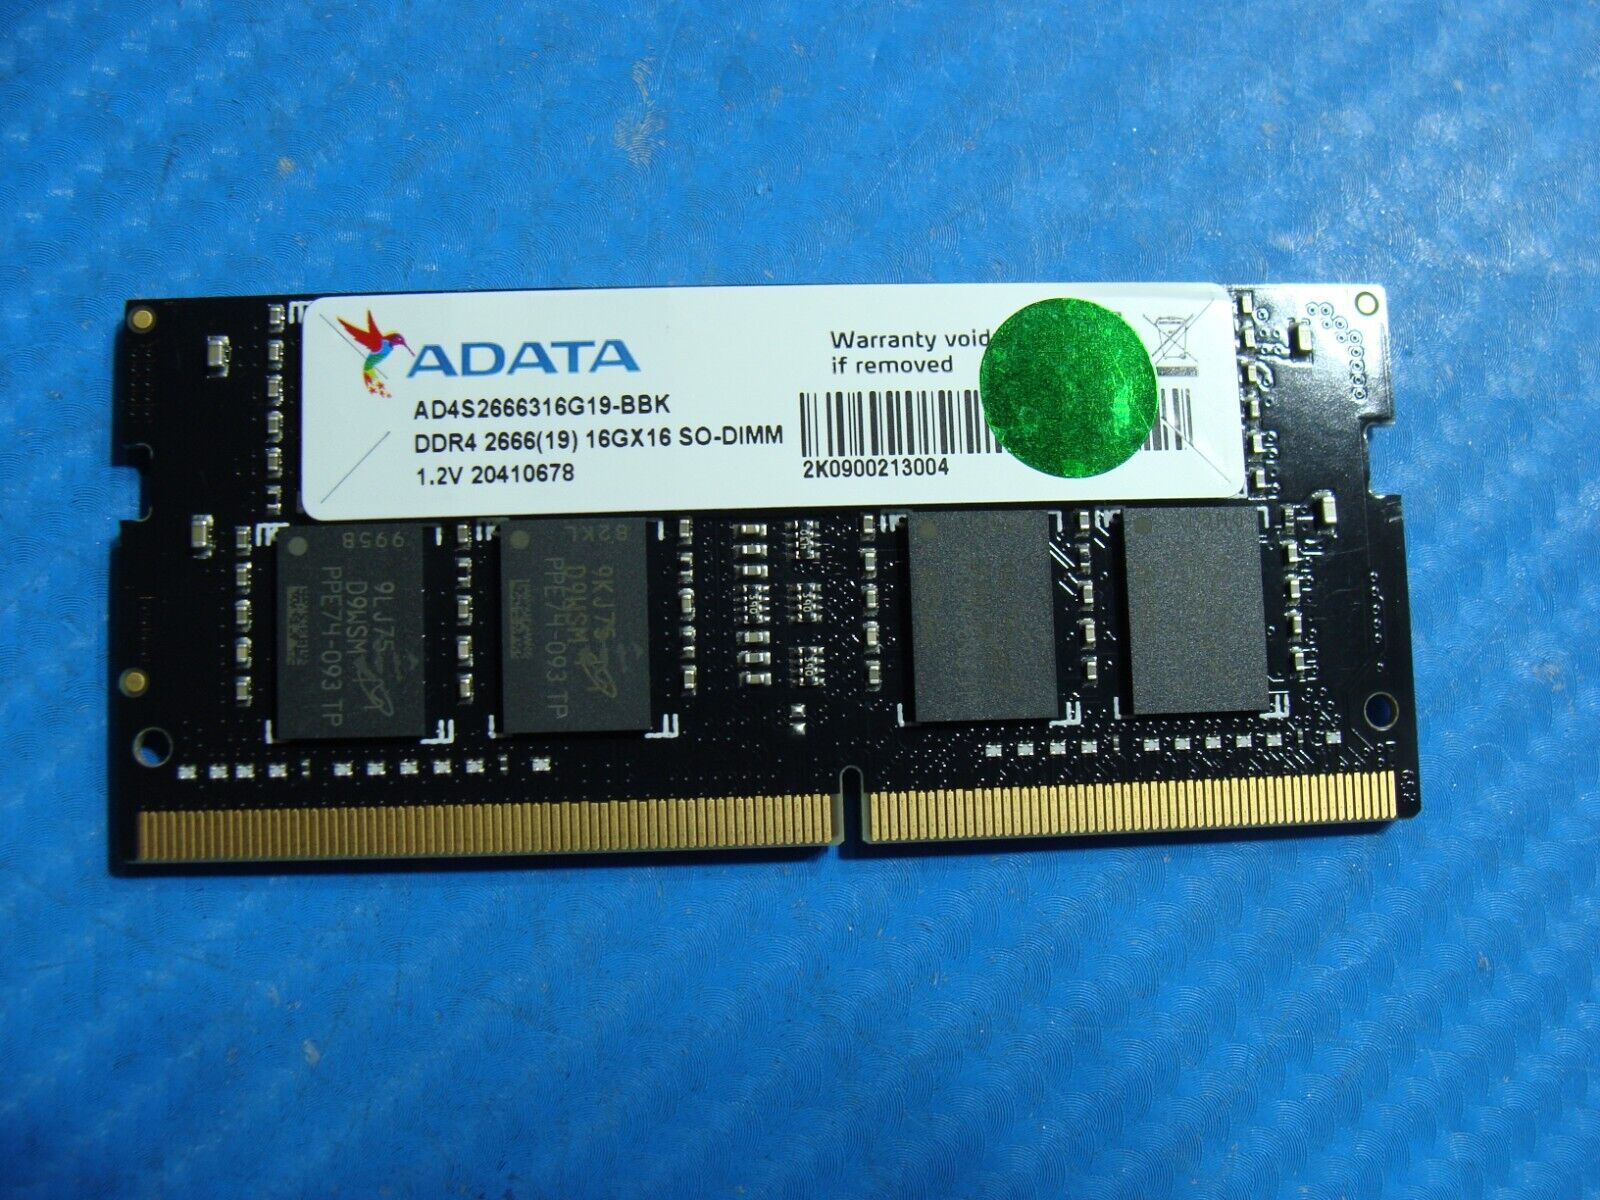 Samle Troende dart Lenovo L340-17IRH ADATA 16GB DDR4 2666(19) Memory RAM SO-DIMM  AD4S2666316G19-BBK